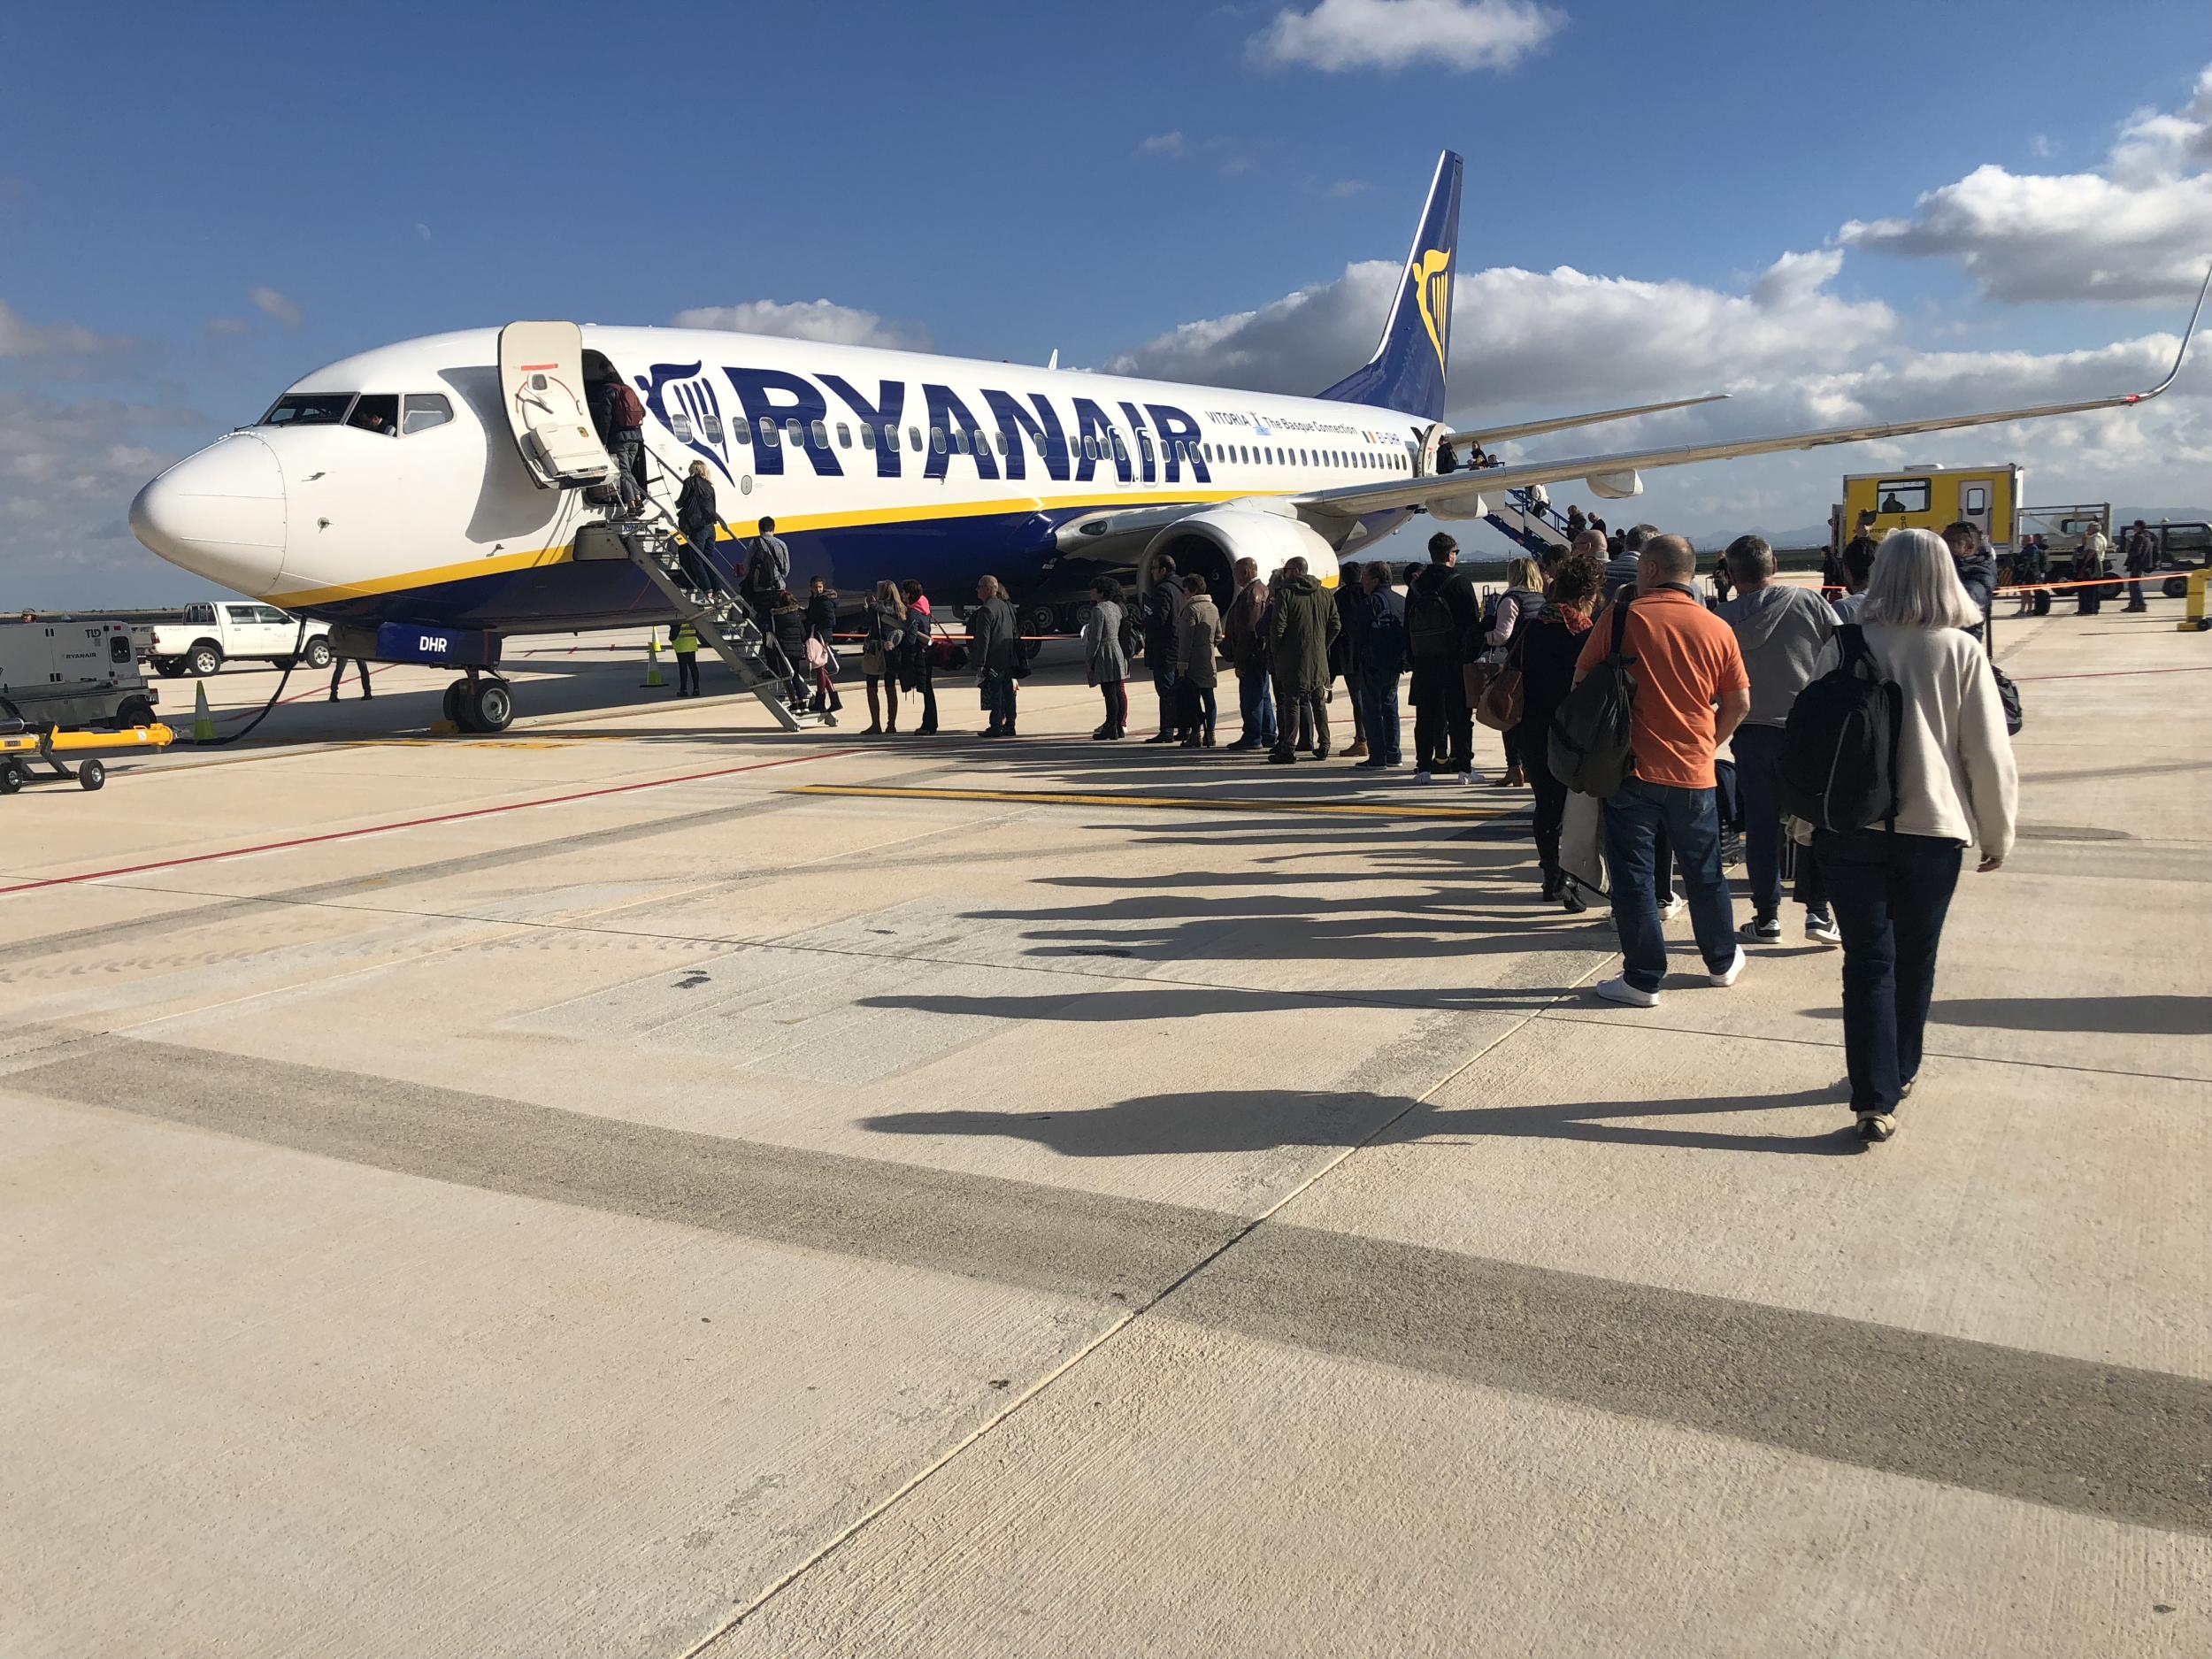 Flight check: Luke Bradley got a tepid response from Ryanair